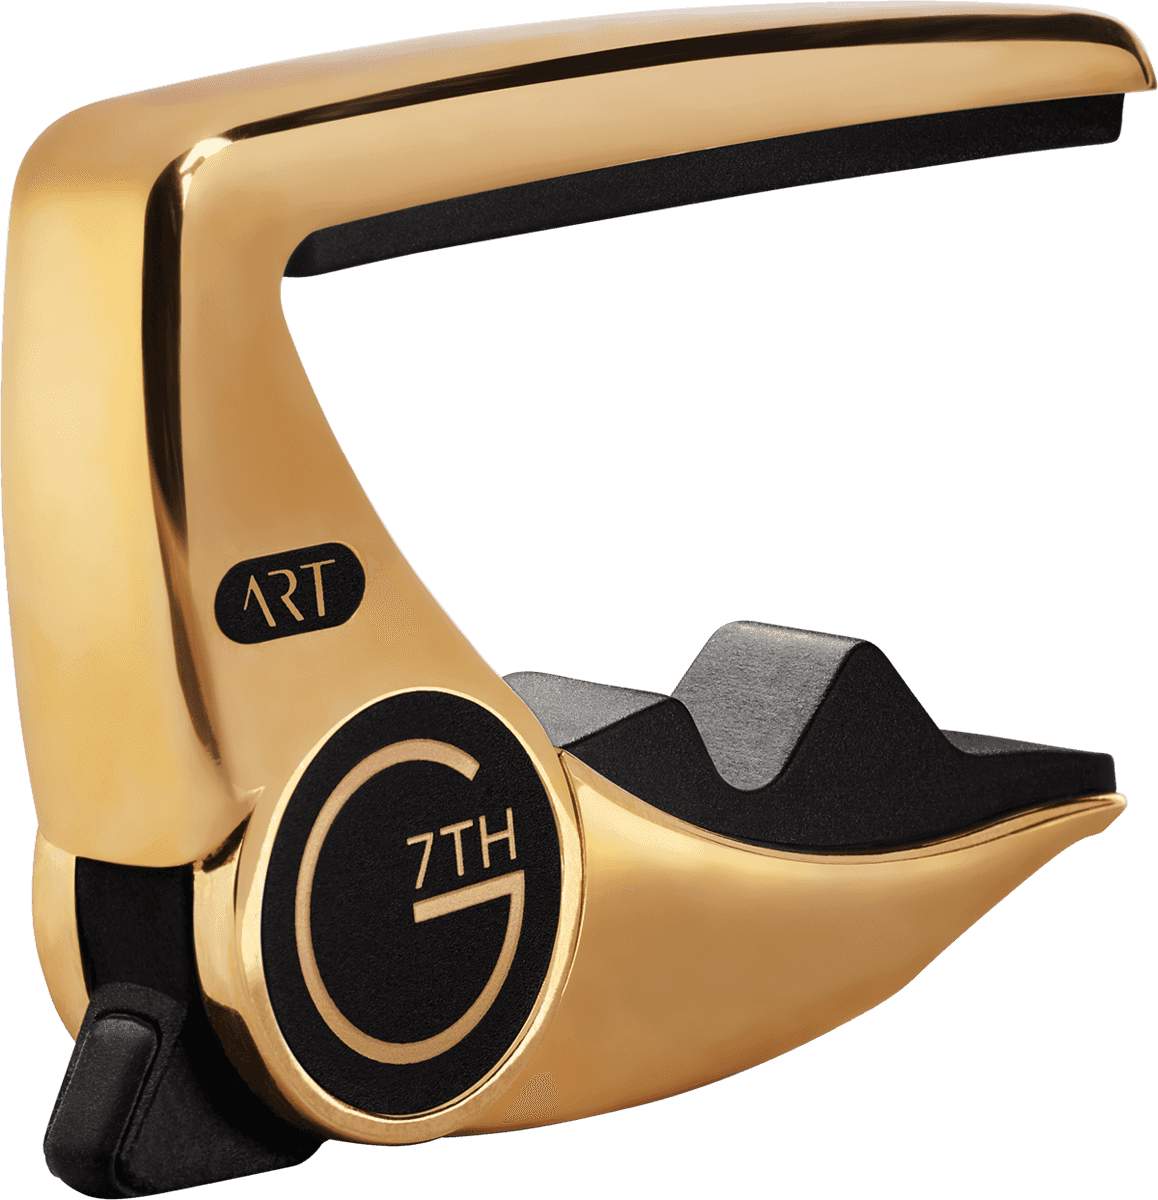 G7th Performance 3 Steel String 18kt Gold-plate - Capodastre & Fatfinger - Variation 1